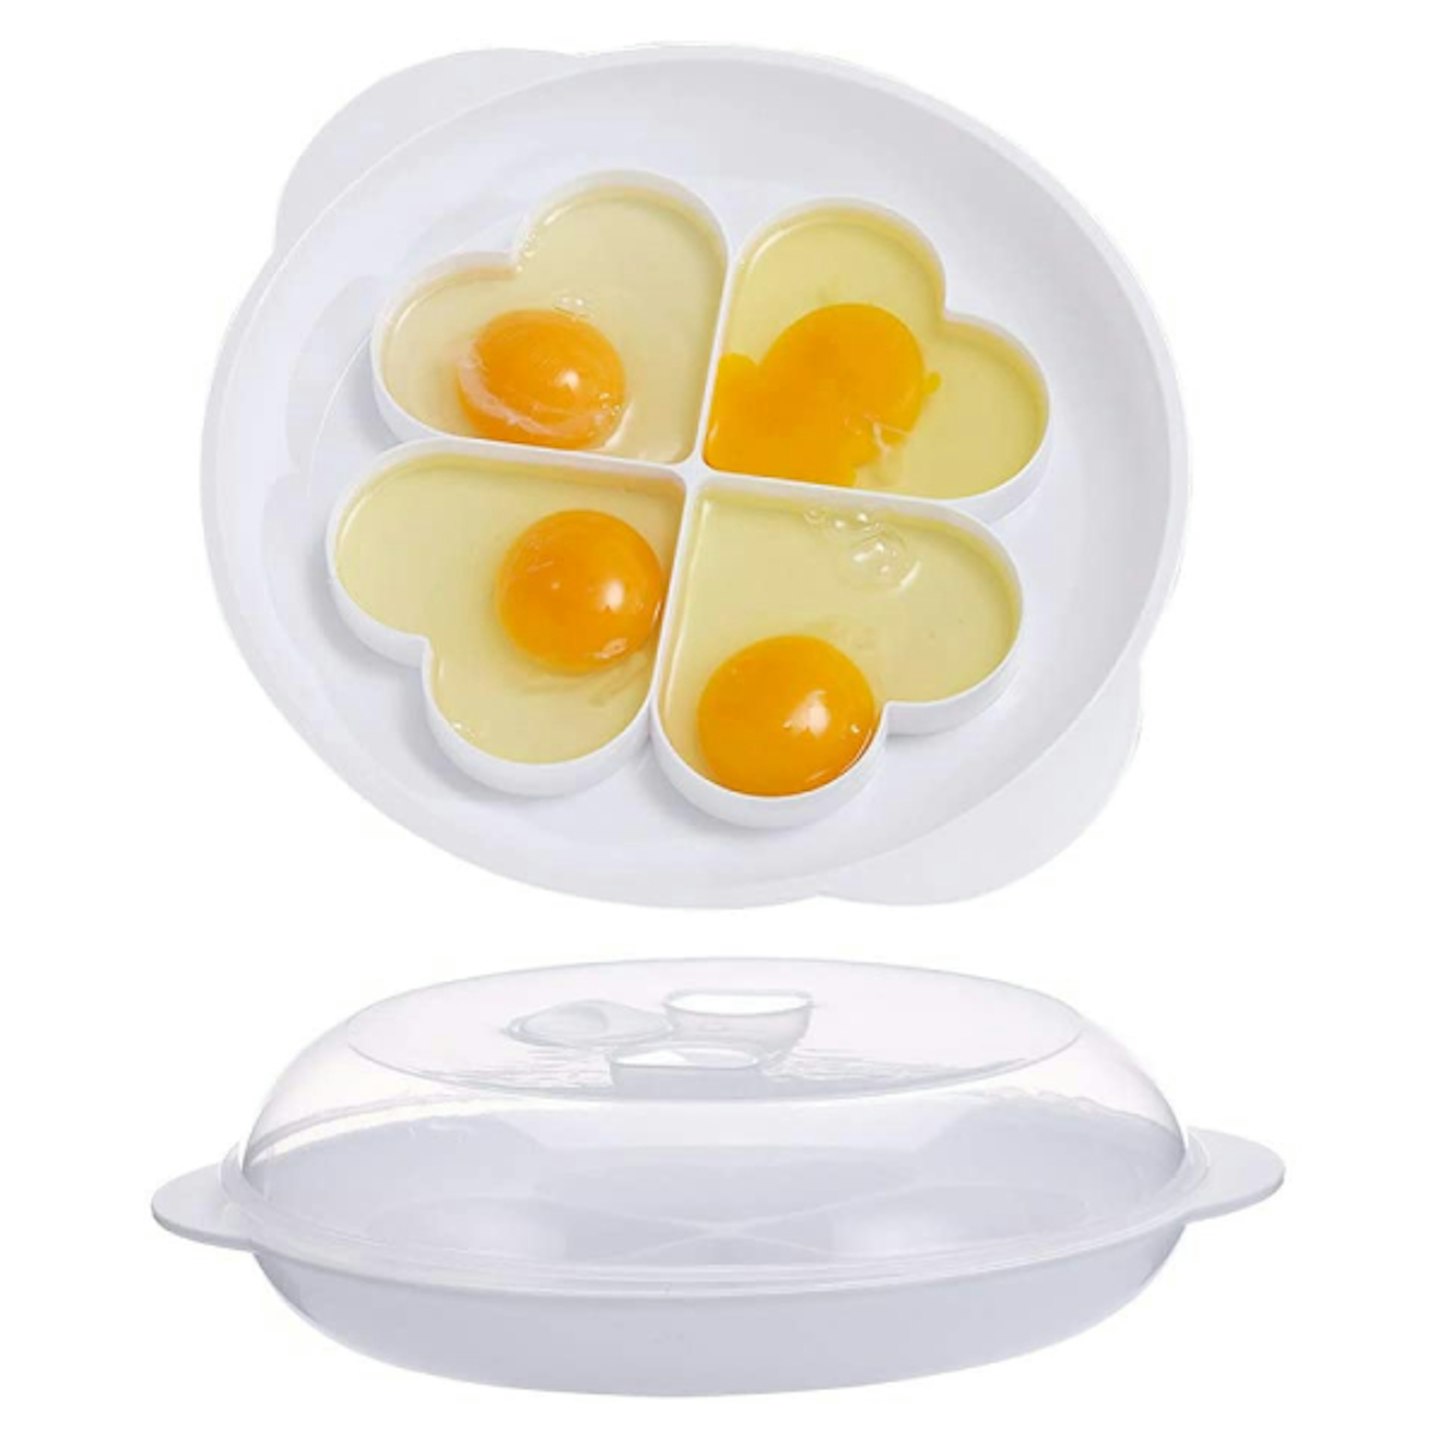 Gobesty 4-egg Microwave Poached Egg Maker